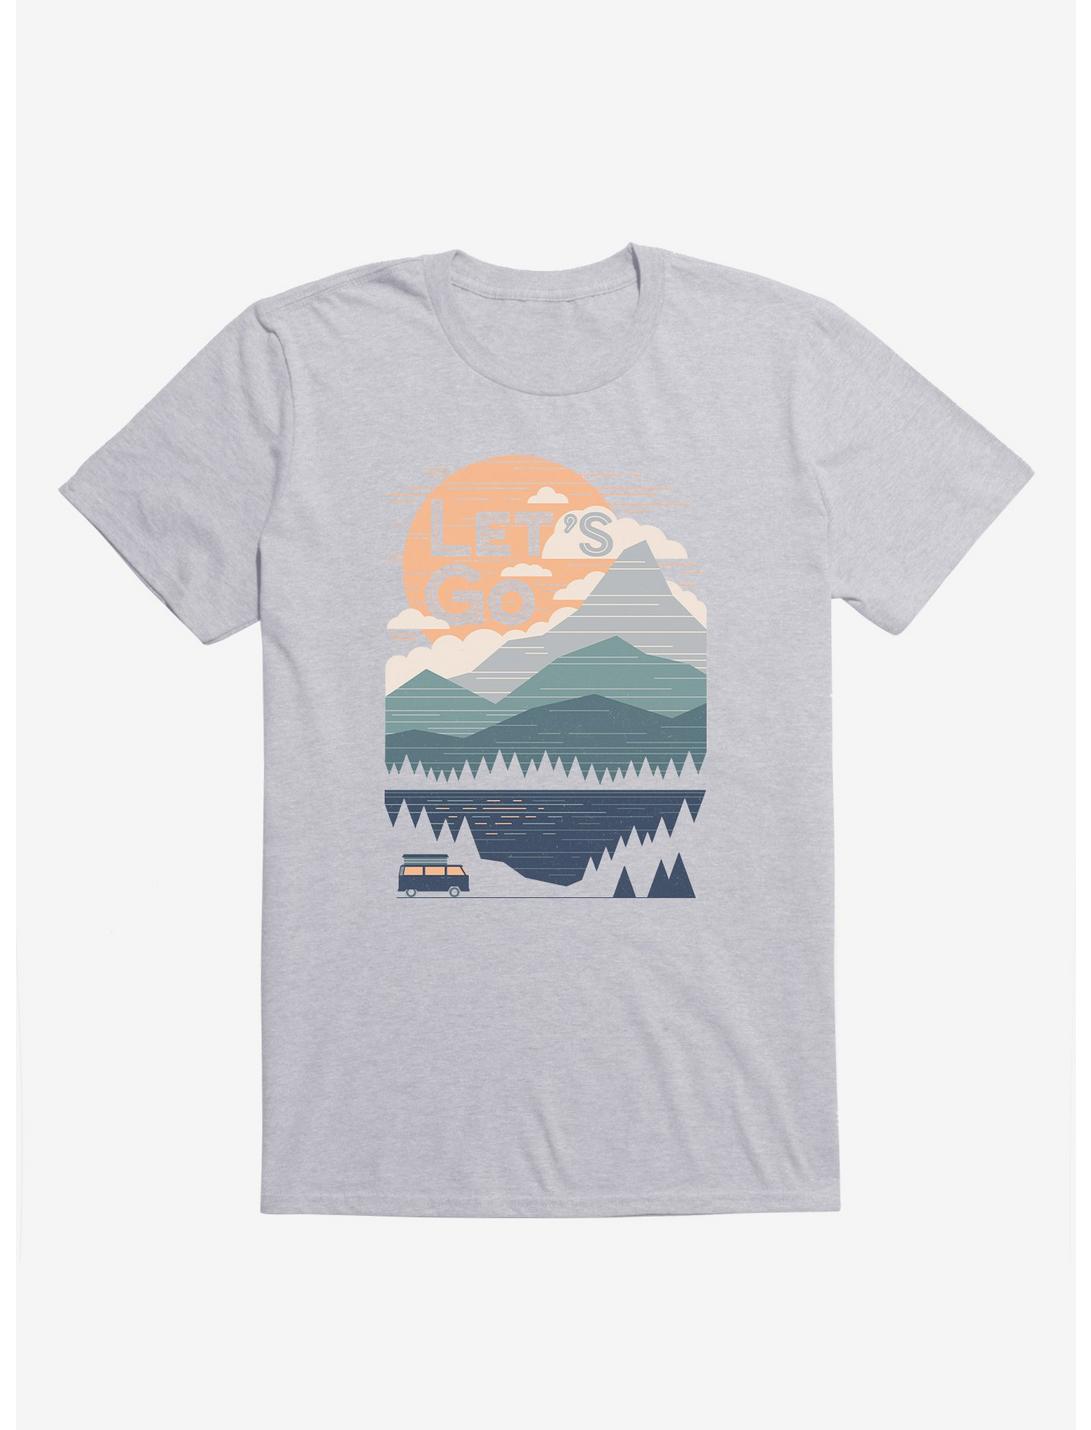 Let's Go Mountains Lake Van Sport Grey T-Shirt, SPORT GRAY, hi-res